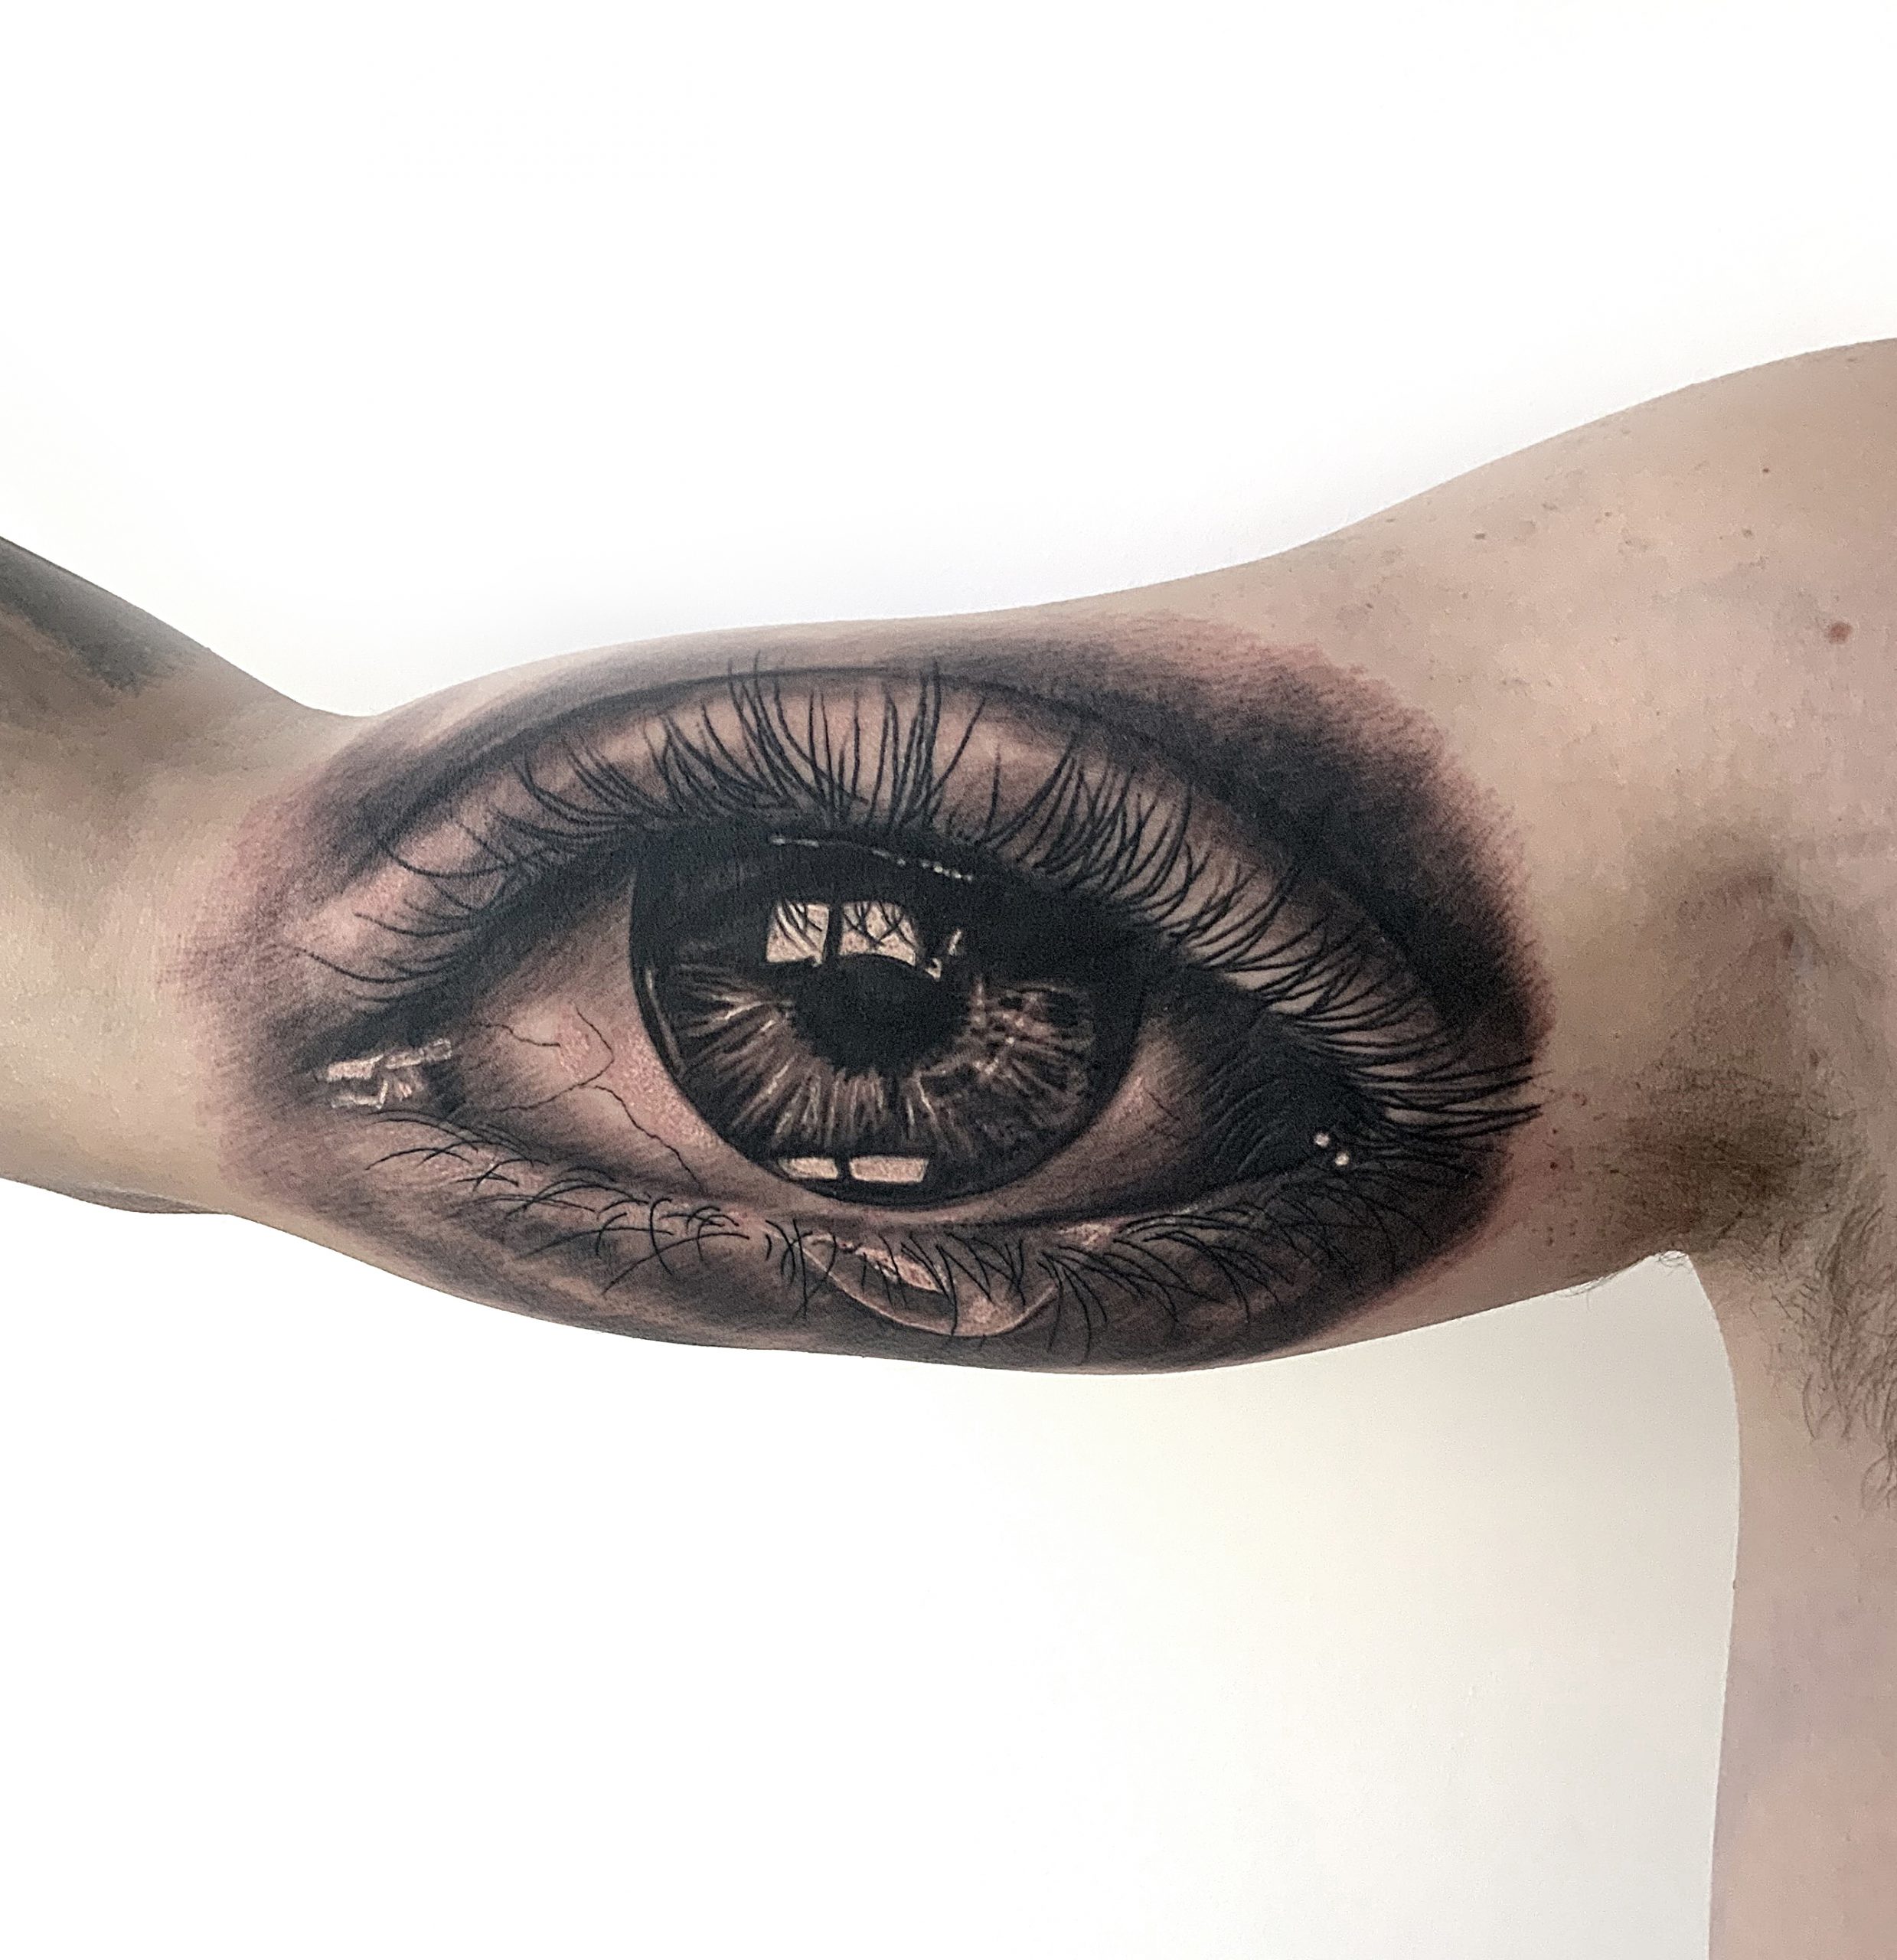 oko tatuaż